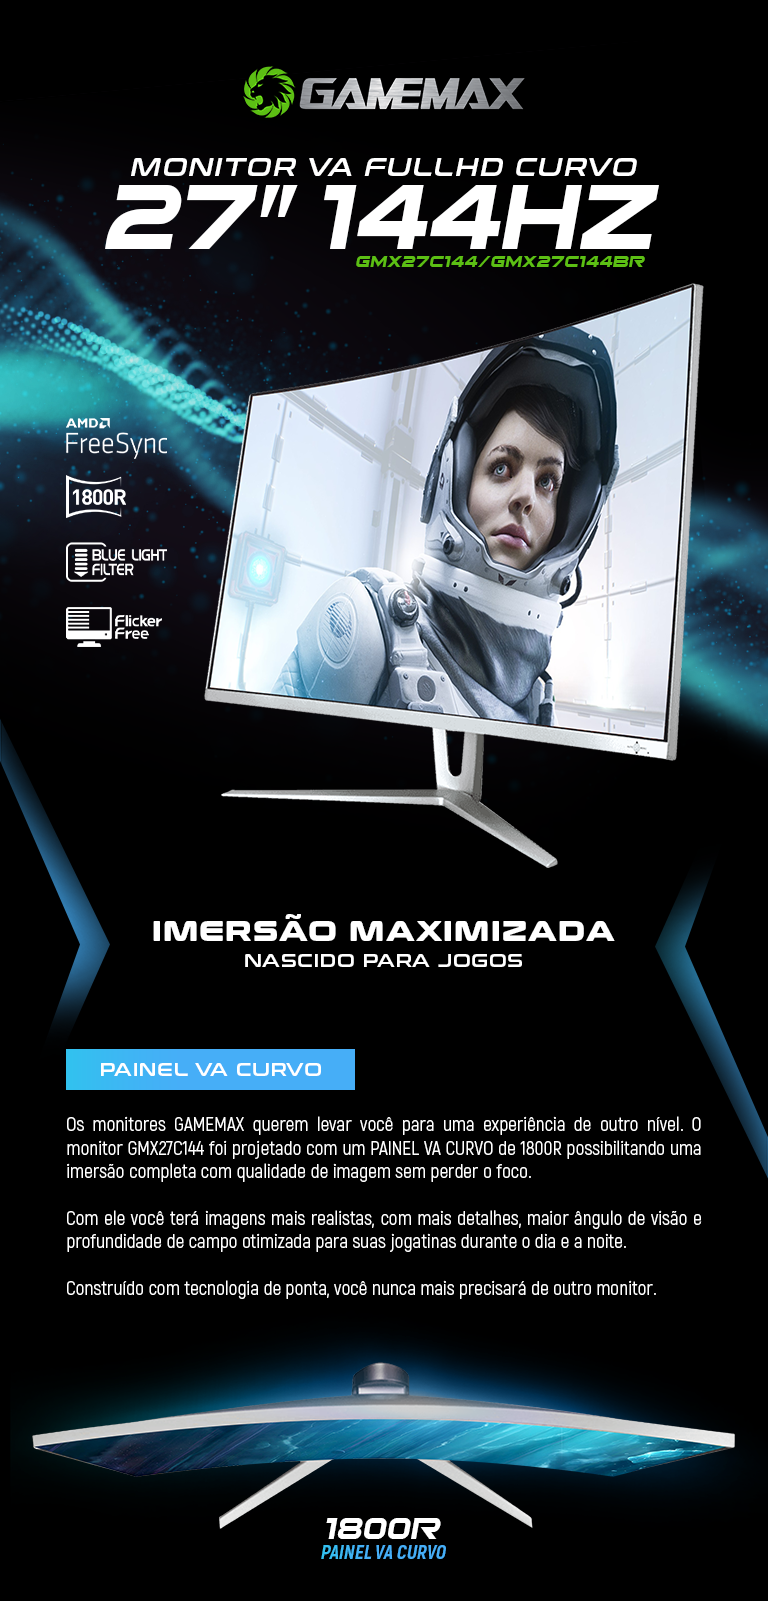 Monitor Gamer Curvo Full HD Gamemax 27 Preto 1080P 144Hz HDMI GMX27C144 -  Monitor para Computador - Magazine Luiza